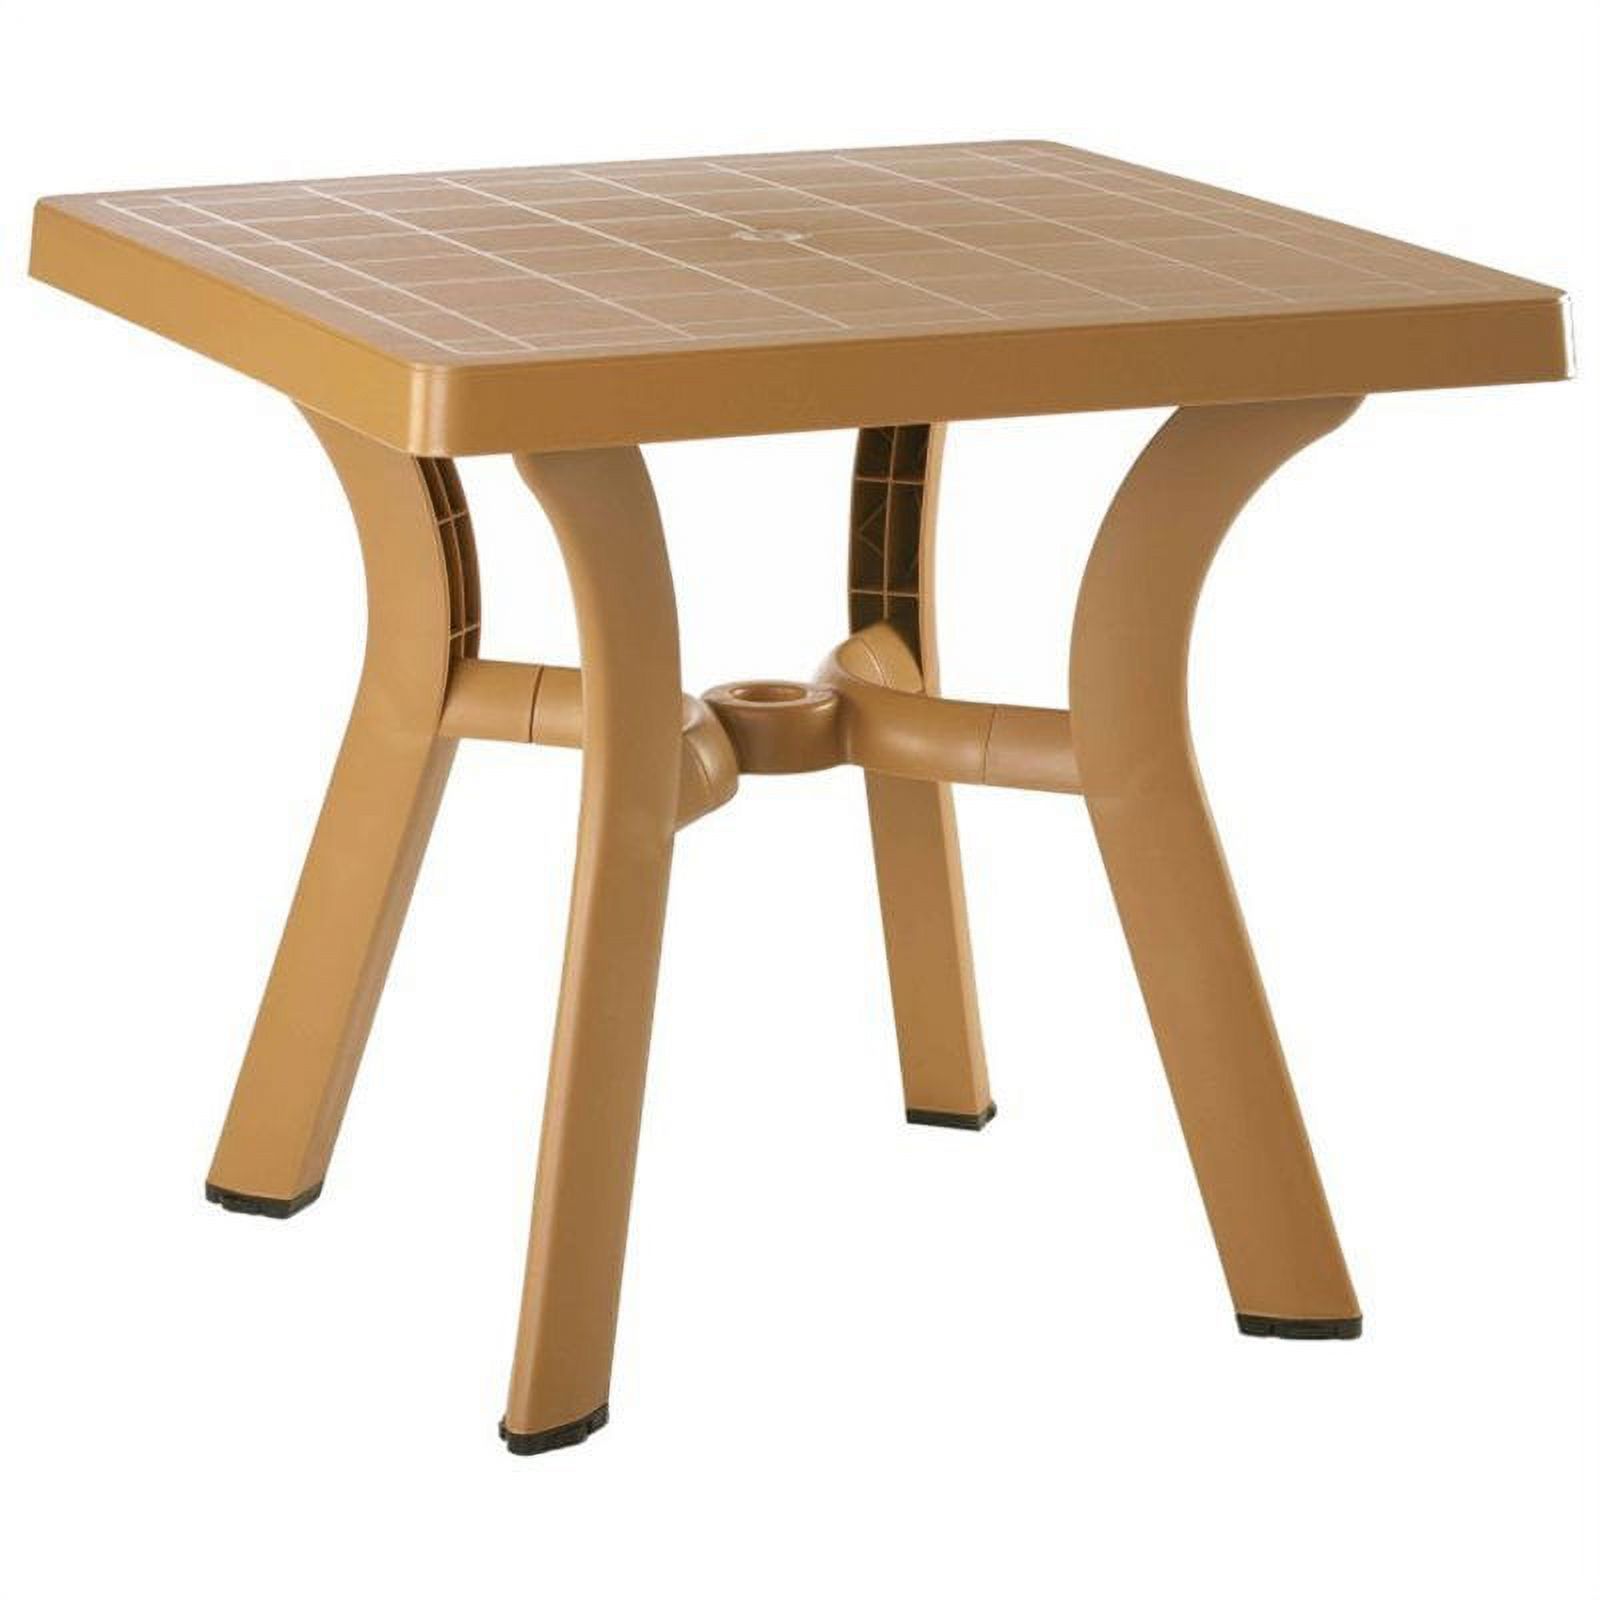 Atlin Designs 31" Resin Square Dining Table in Teak Brown - image 1 of 3